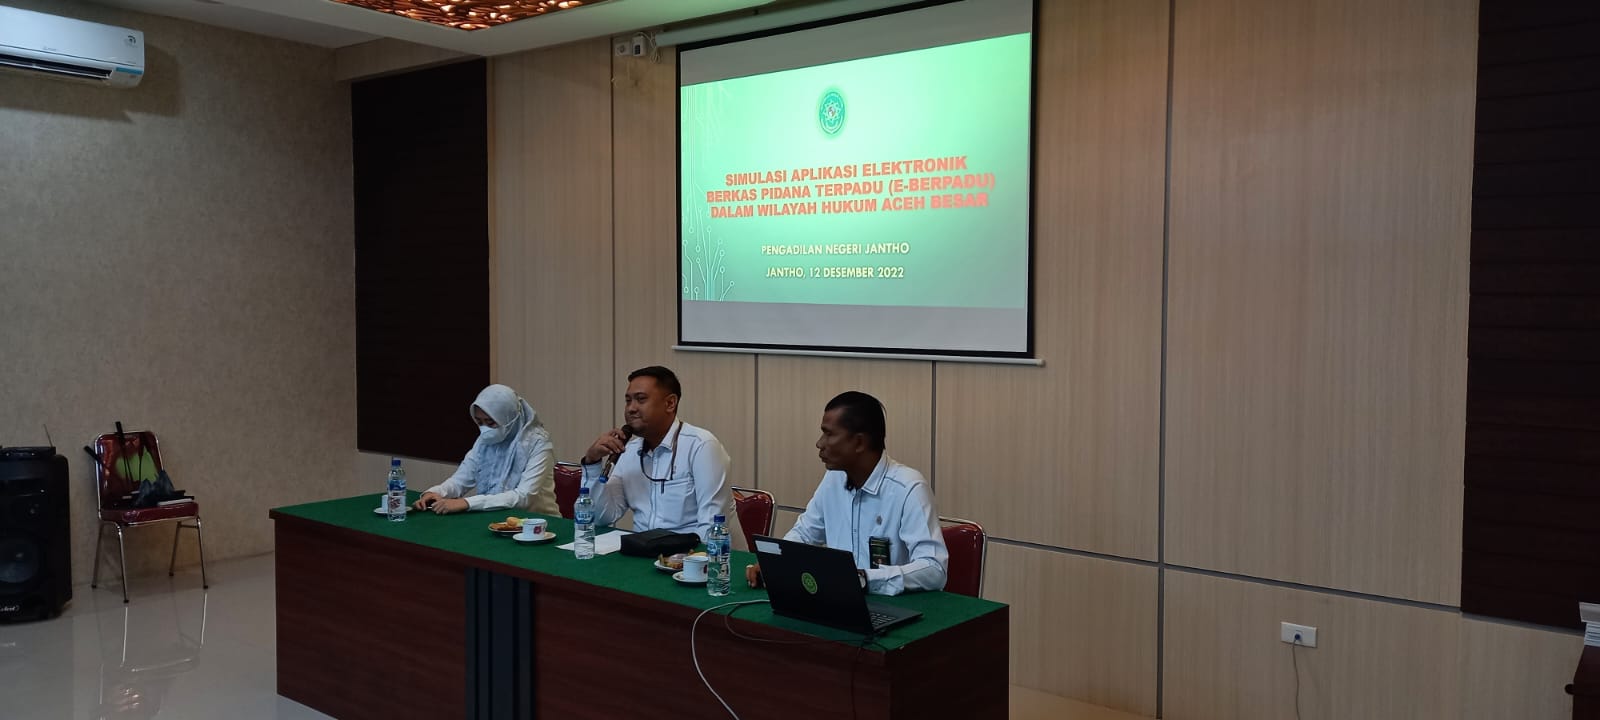 Ketua Pengadilan Negeri Jantho Lakukan Simulasi ( e – Berpadu ) Bersama Aparat Penegak Hukum dalam Wilayah Yuridiksi Kabupaten Aceh Besar